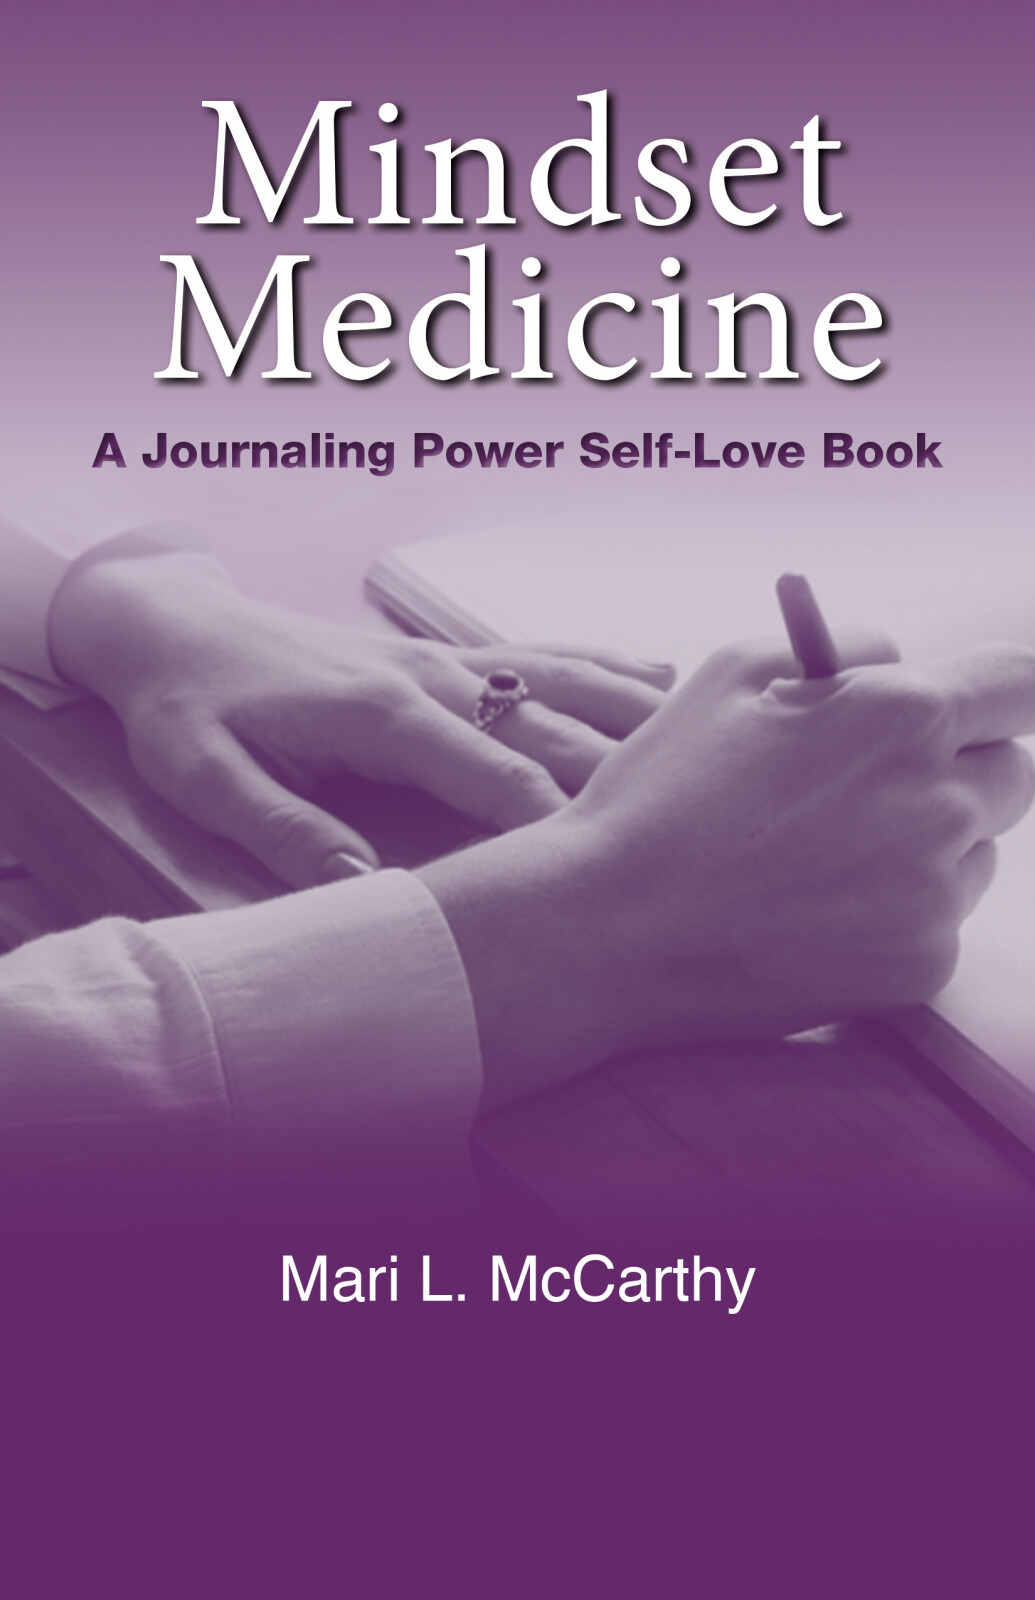 Mindset Medicine With Mari L. McCarthy